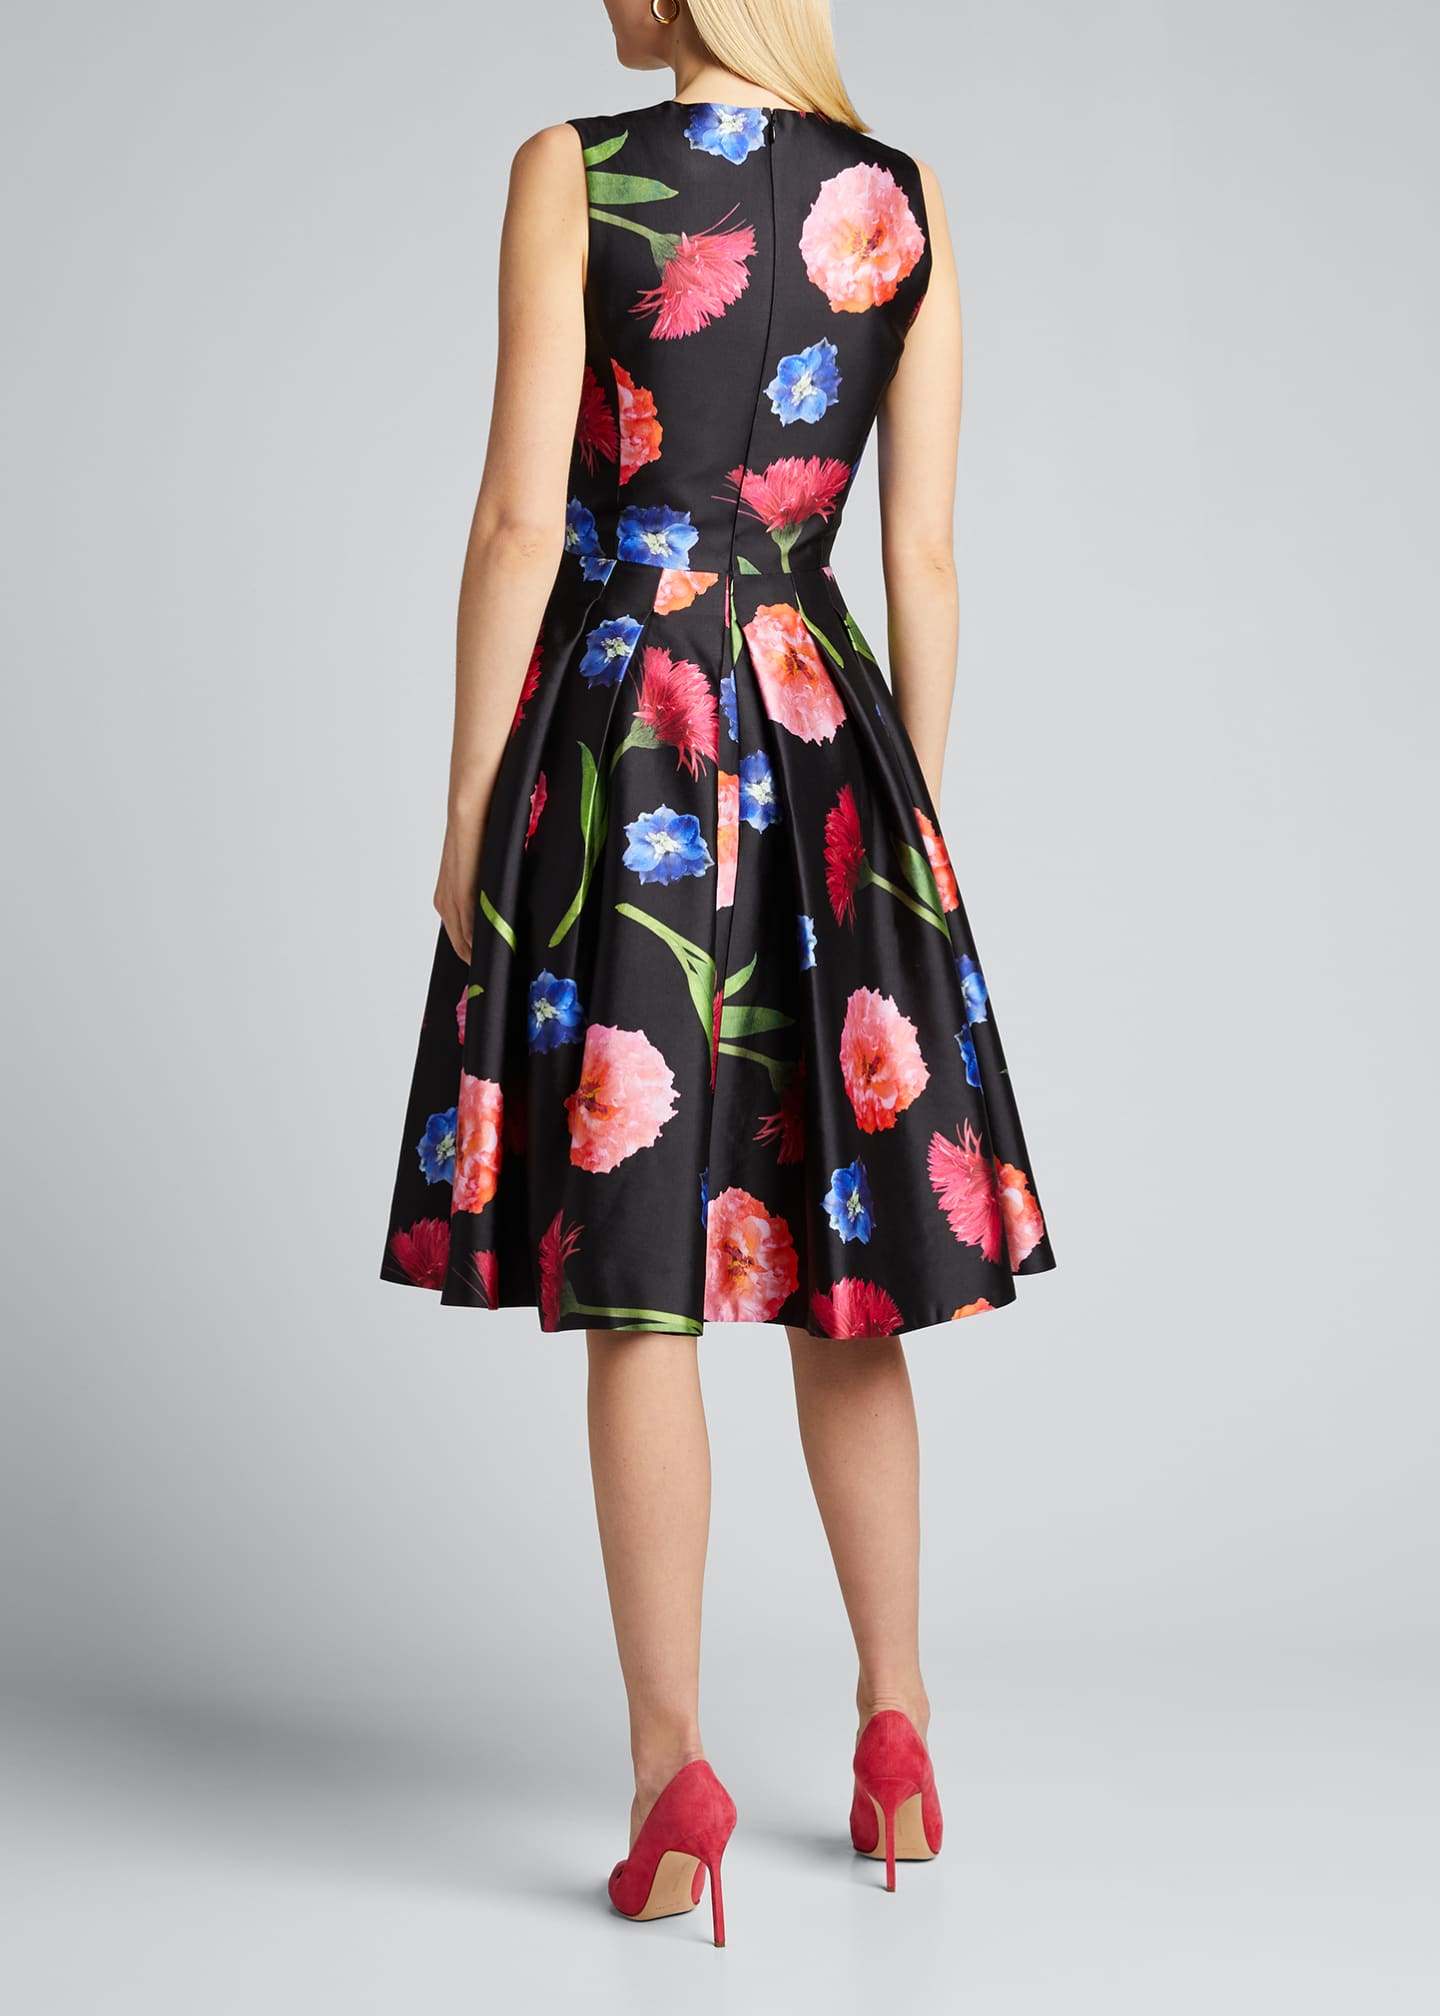 Carolina Herrera Floral Mikado Sleeveless A-Line Dress - Bergdorf Goodman